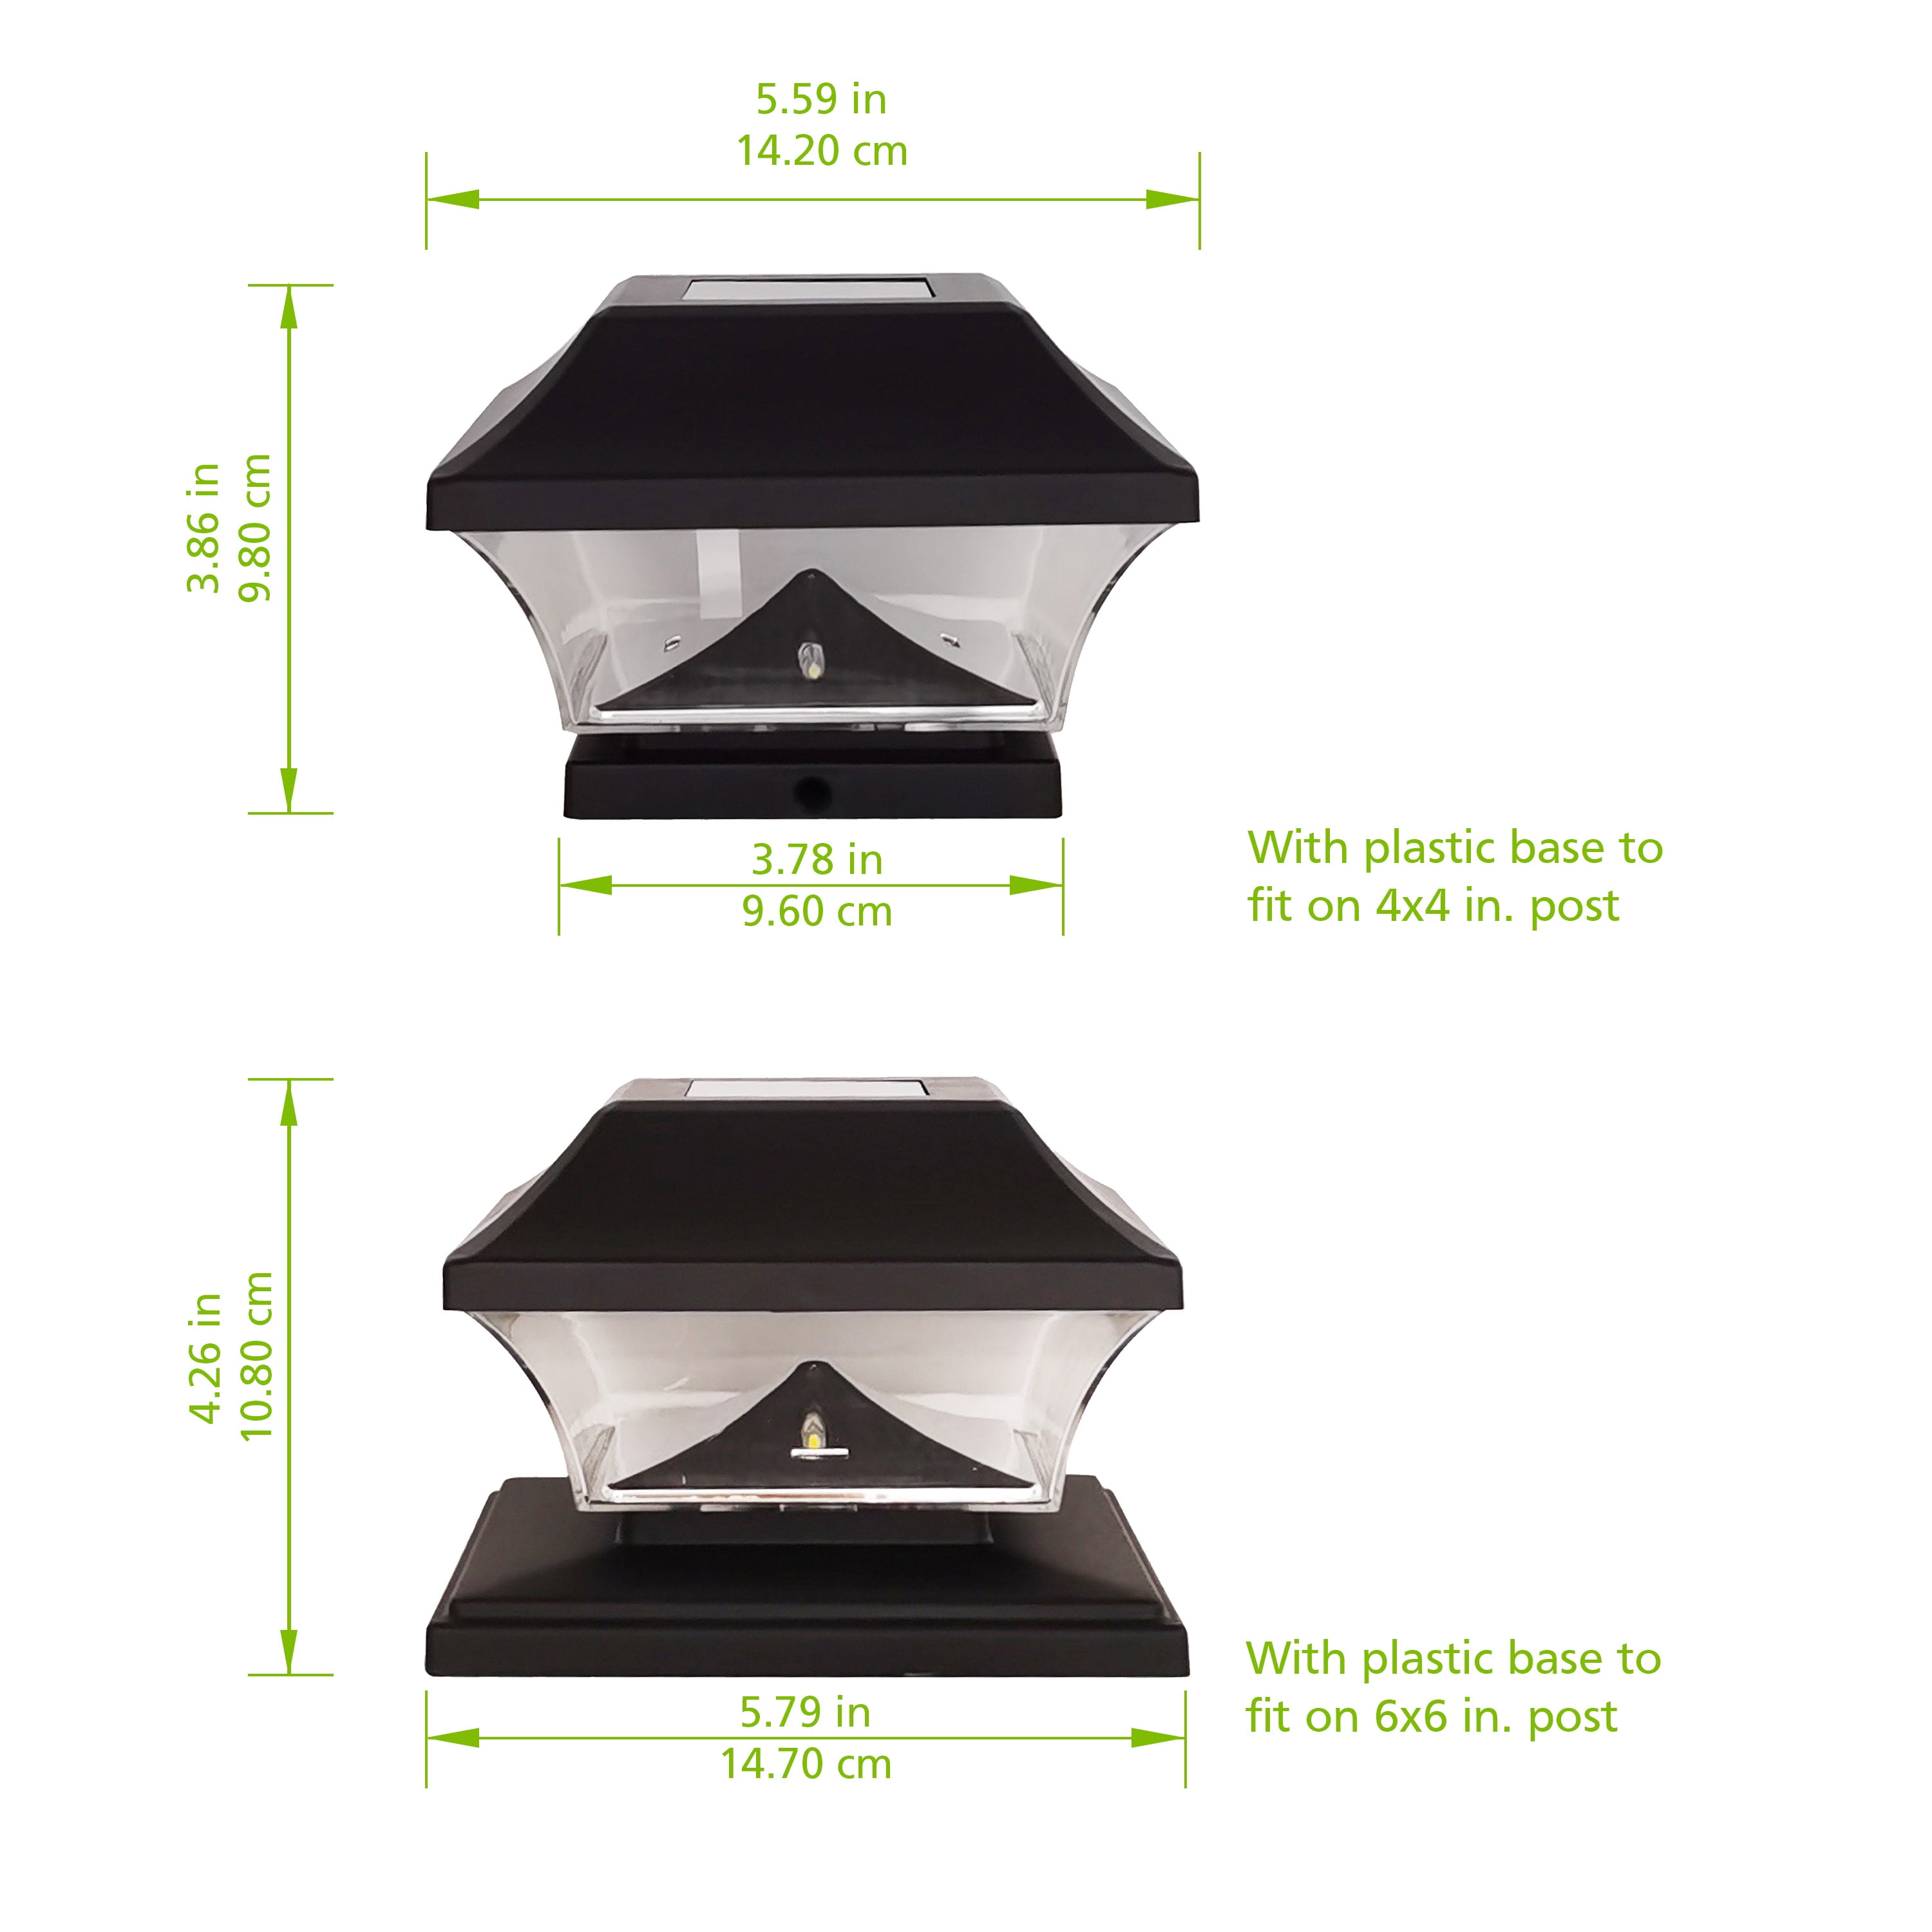 GKOLED Low Voltage Pyramid Post Cap Light, 9-15V AC/DC 3W IP65 Outdoor Deck  Lighting, 2700K LED Fence Cap Light for 3.5x3.5 4x4 Wood or Vinyl Posts